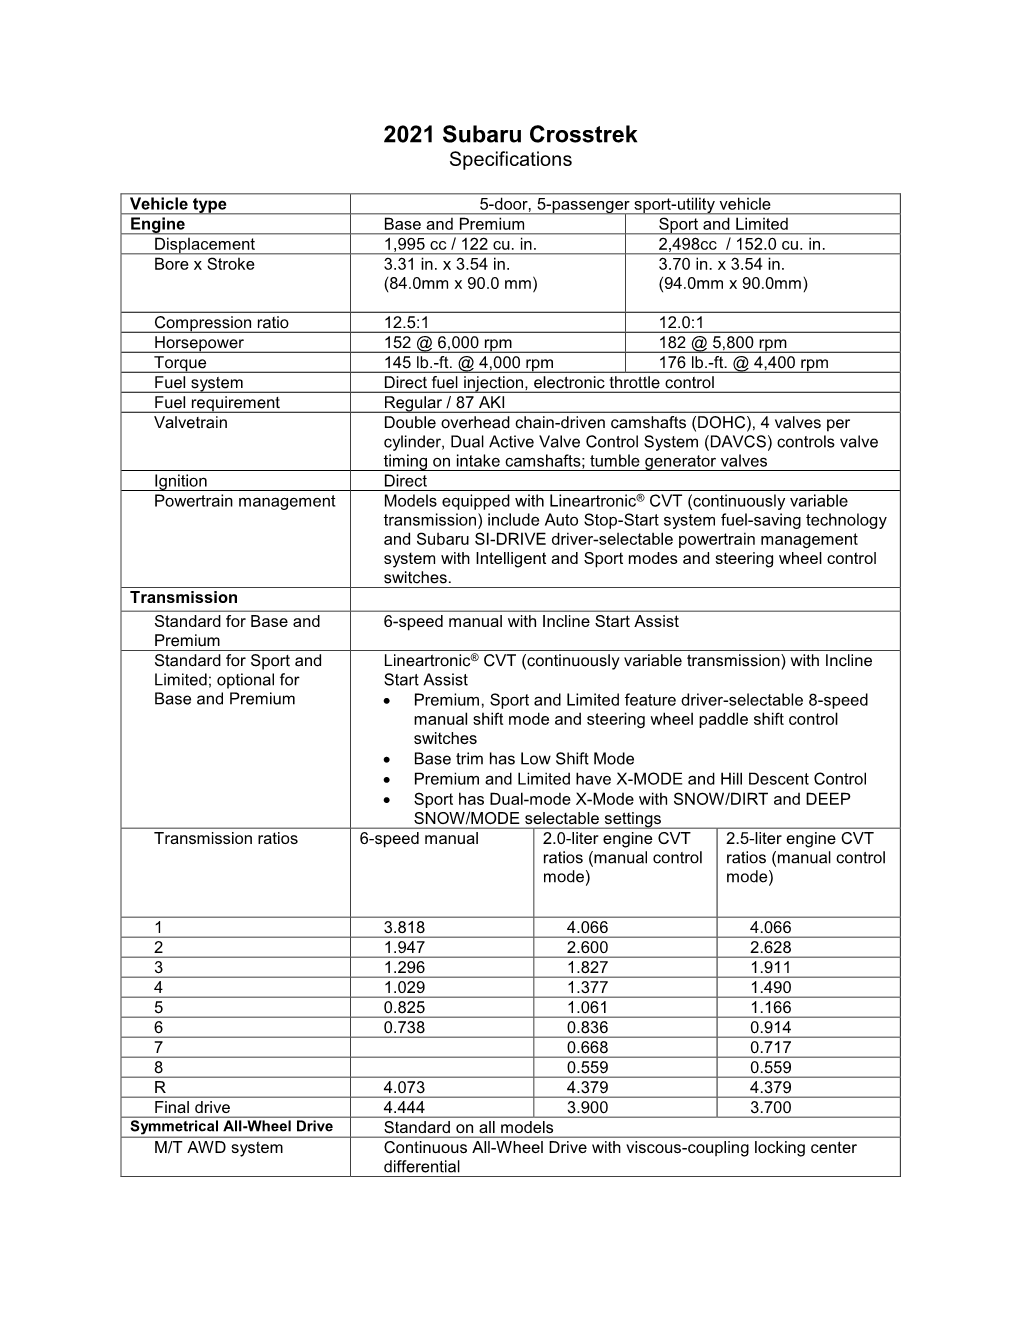 2021 Subaru Crosstrek Specifications